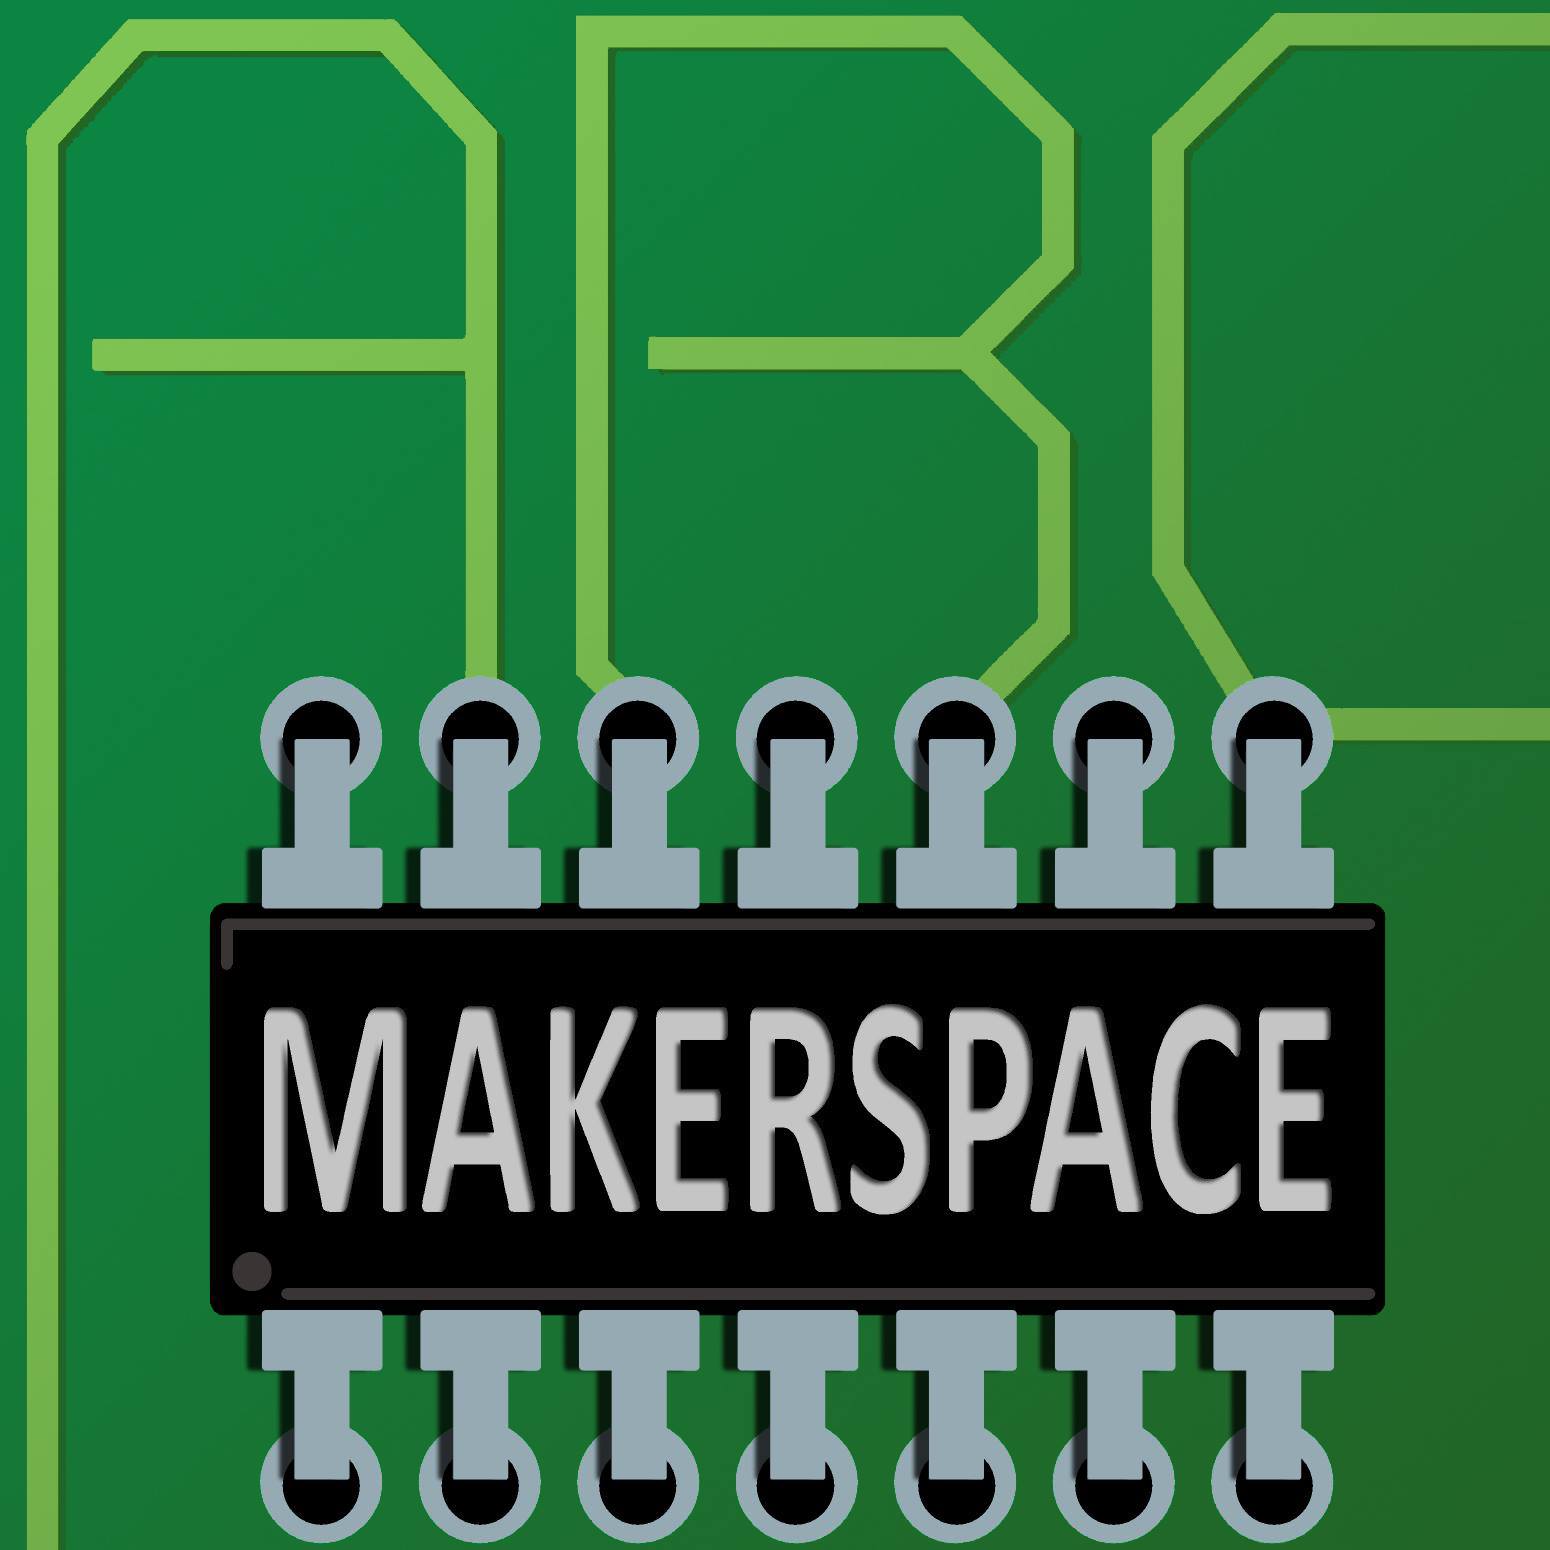 Logo ABC Makerspace.jpg